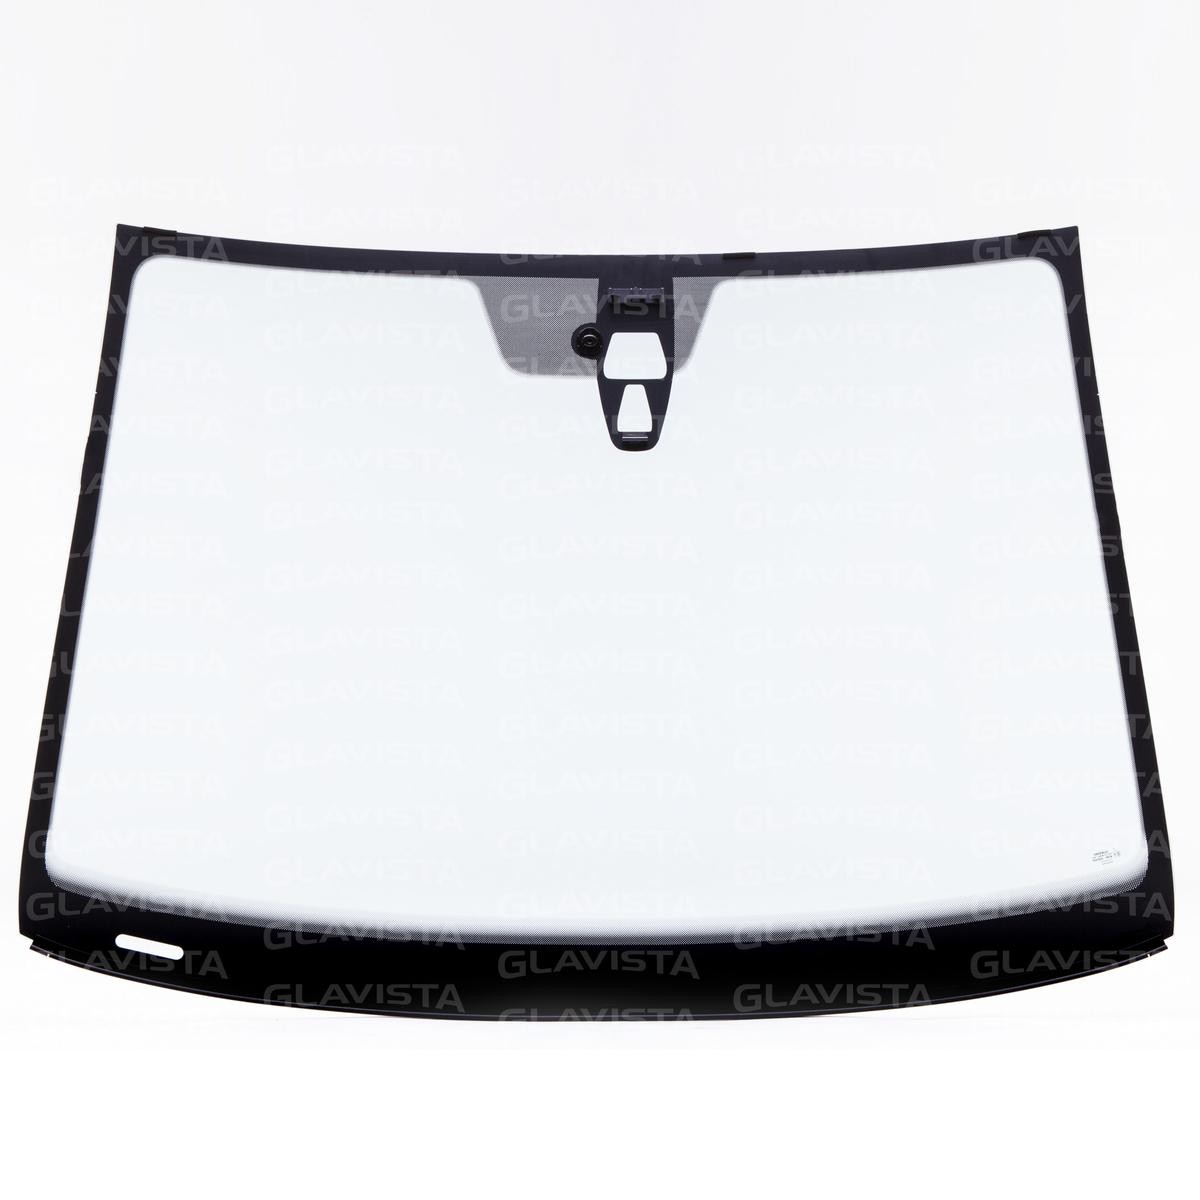 763295 GLAVISTA Solar control glass, with camera mount, with mirror holder, green Windshield WS/LDW7814GS buy